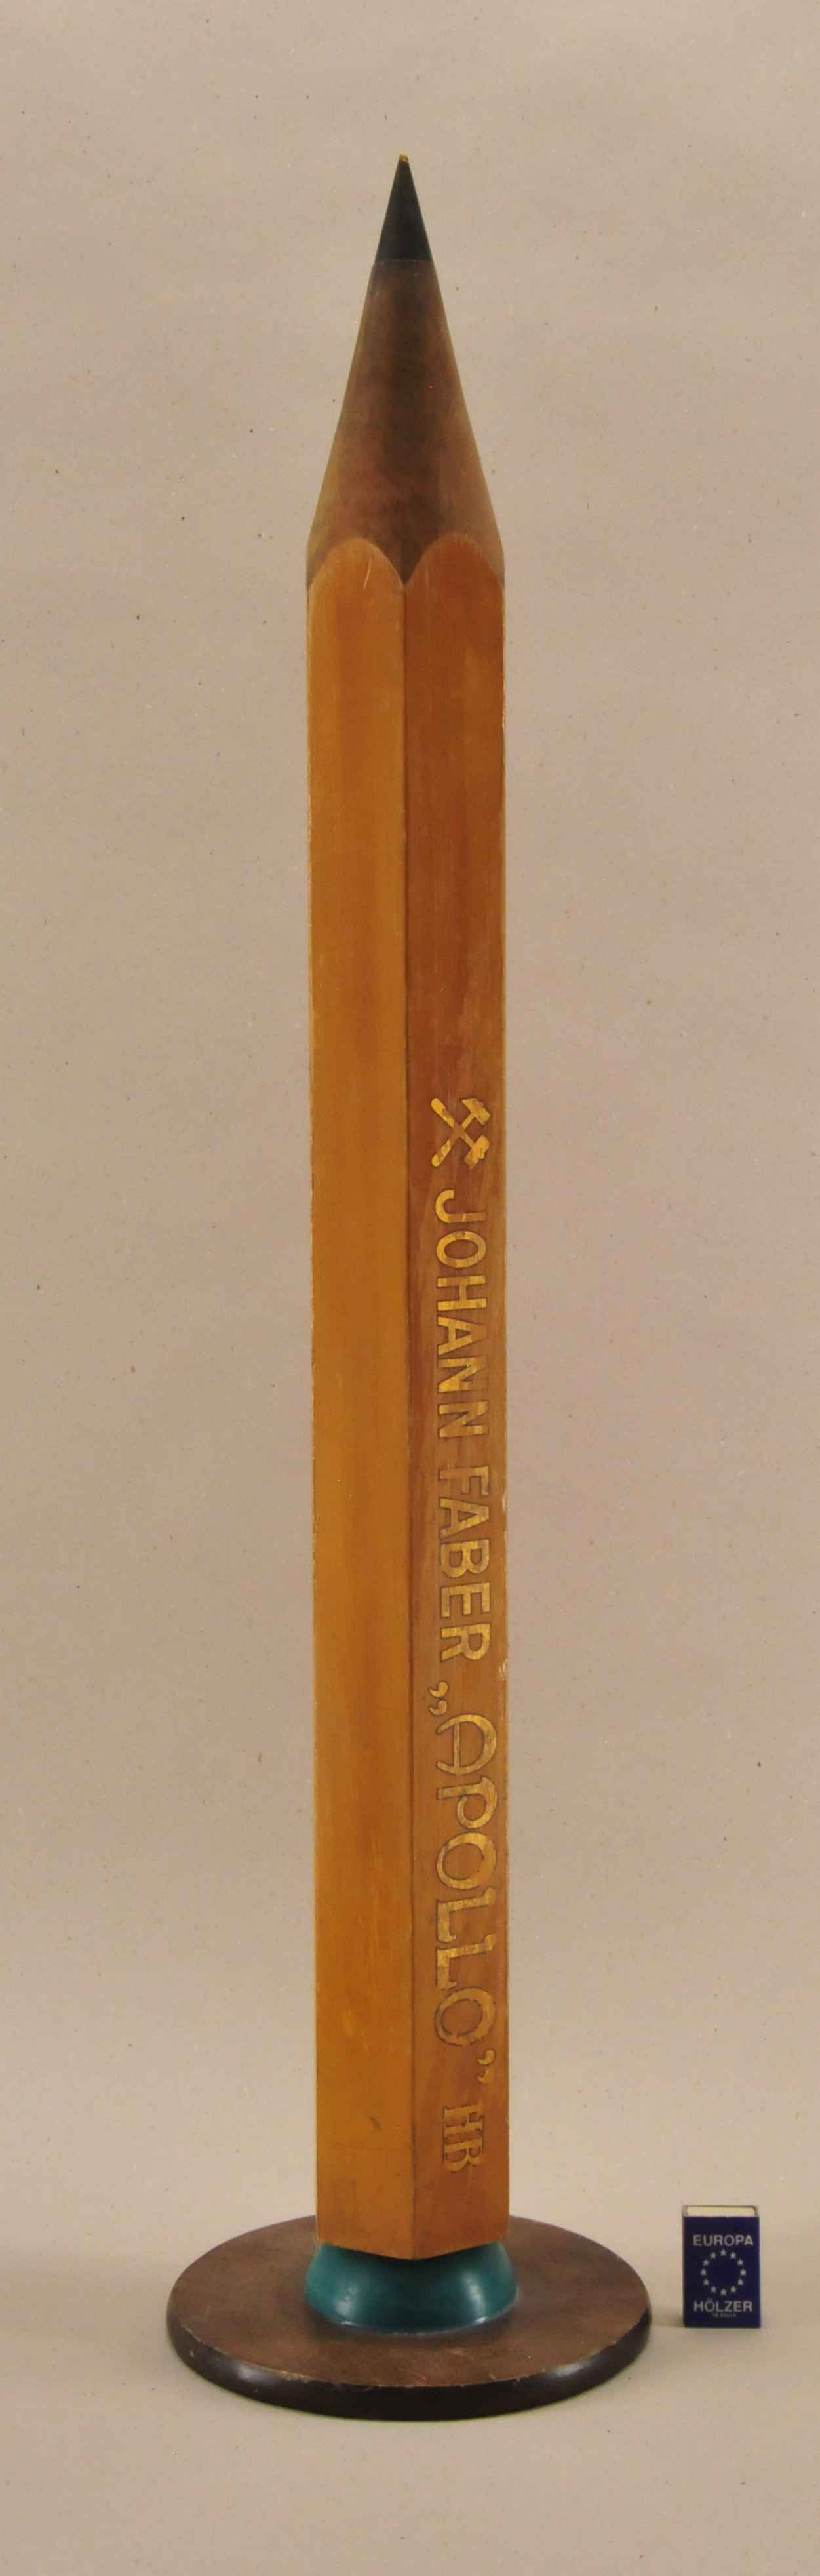 Johann Faber "Apollo" Bleistift 